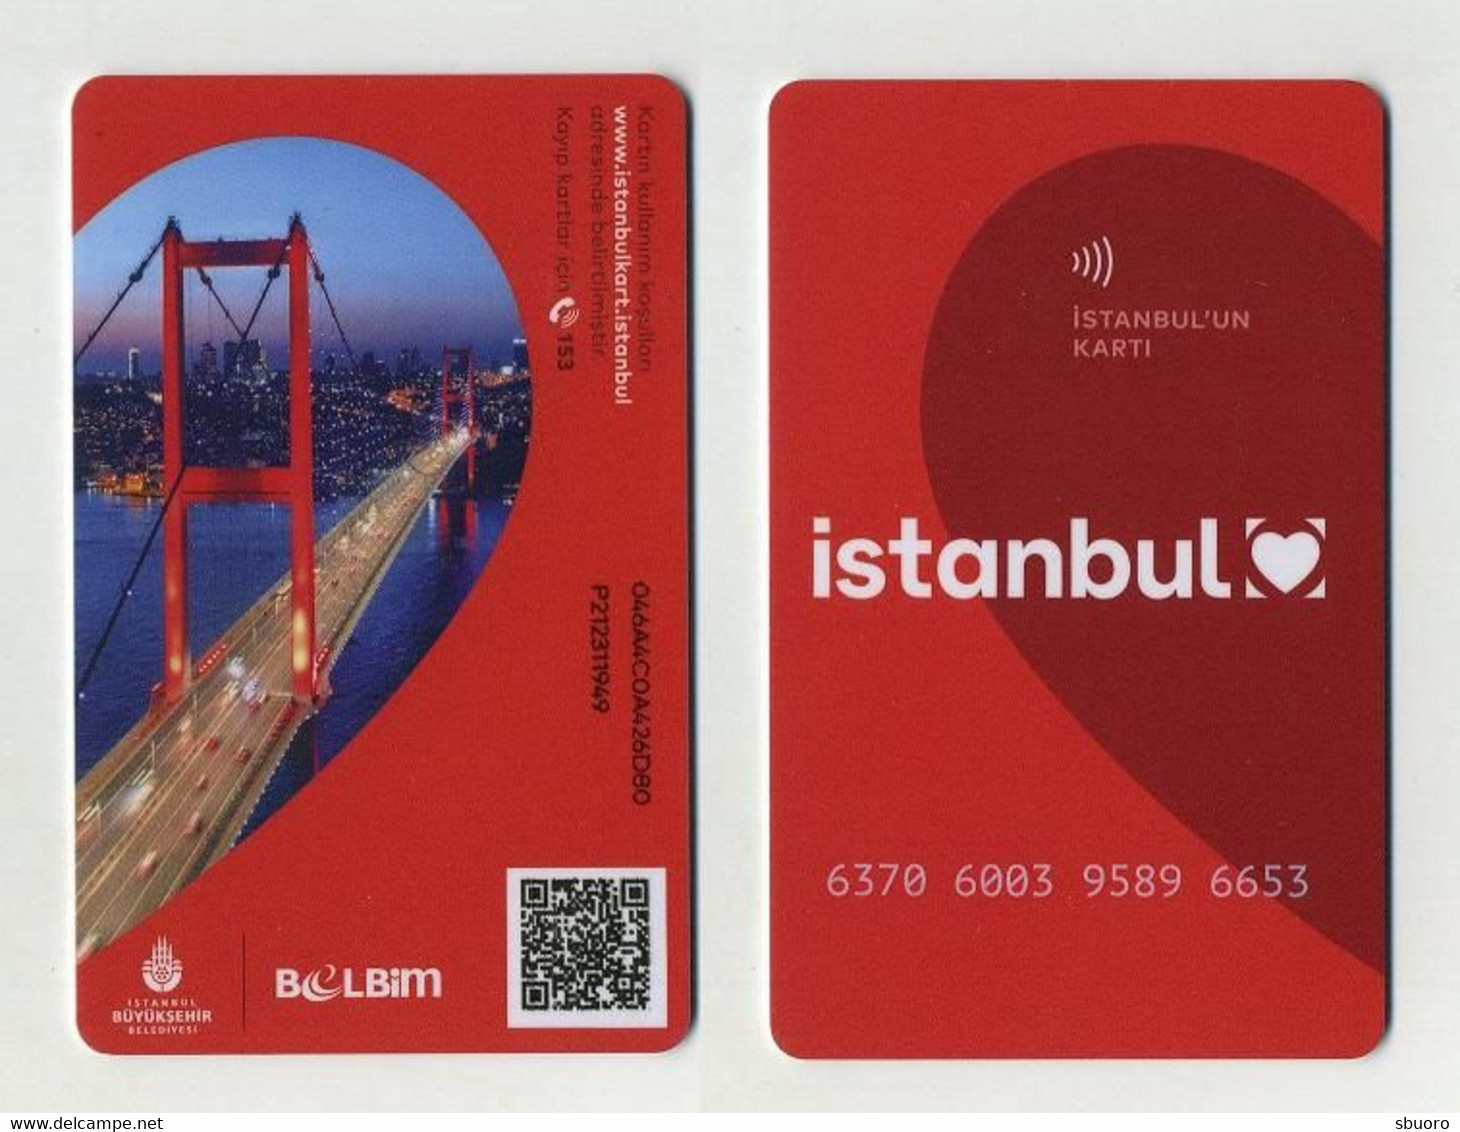 Istanbul Card 2021 - Turquie Turkey Türkiye Türkei - Pour Transports Publics : Métro, Tramway Et/ou Seabus - Welt